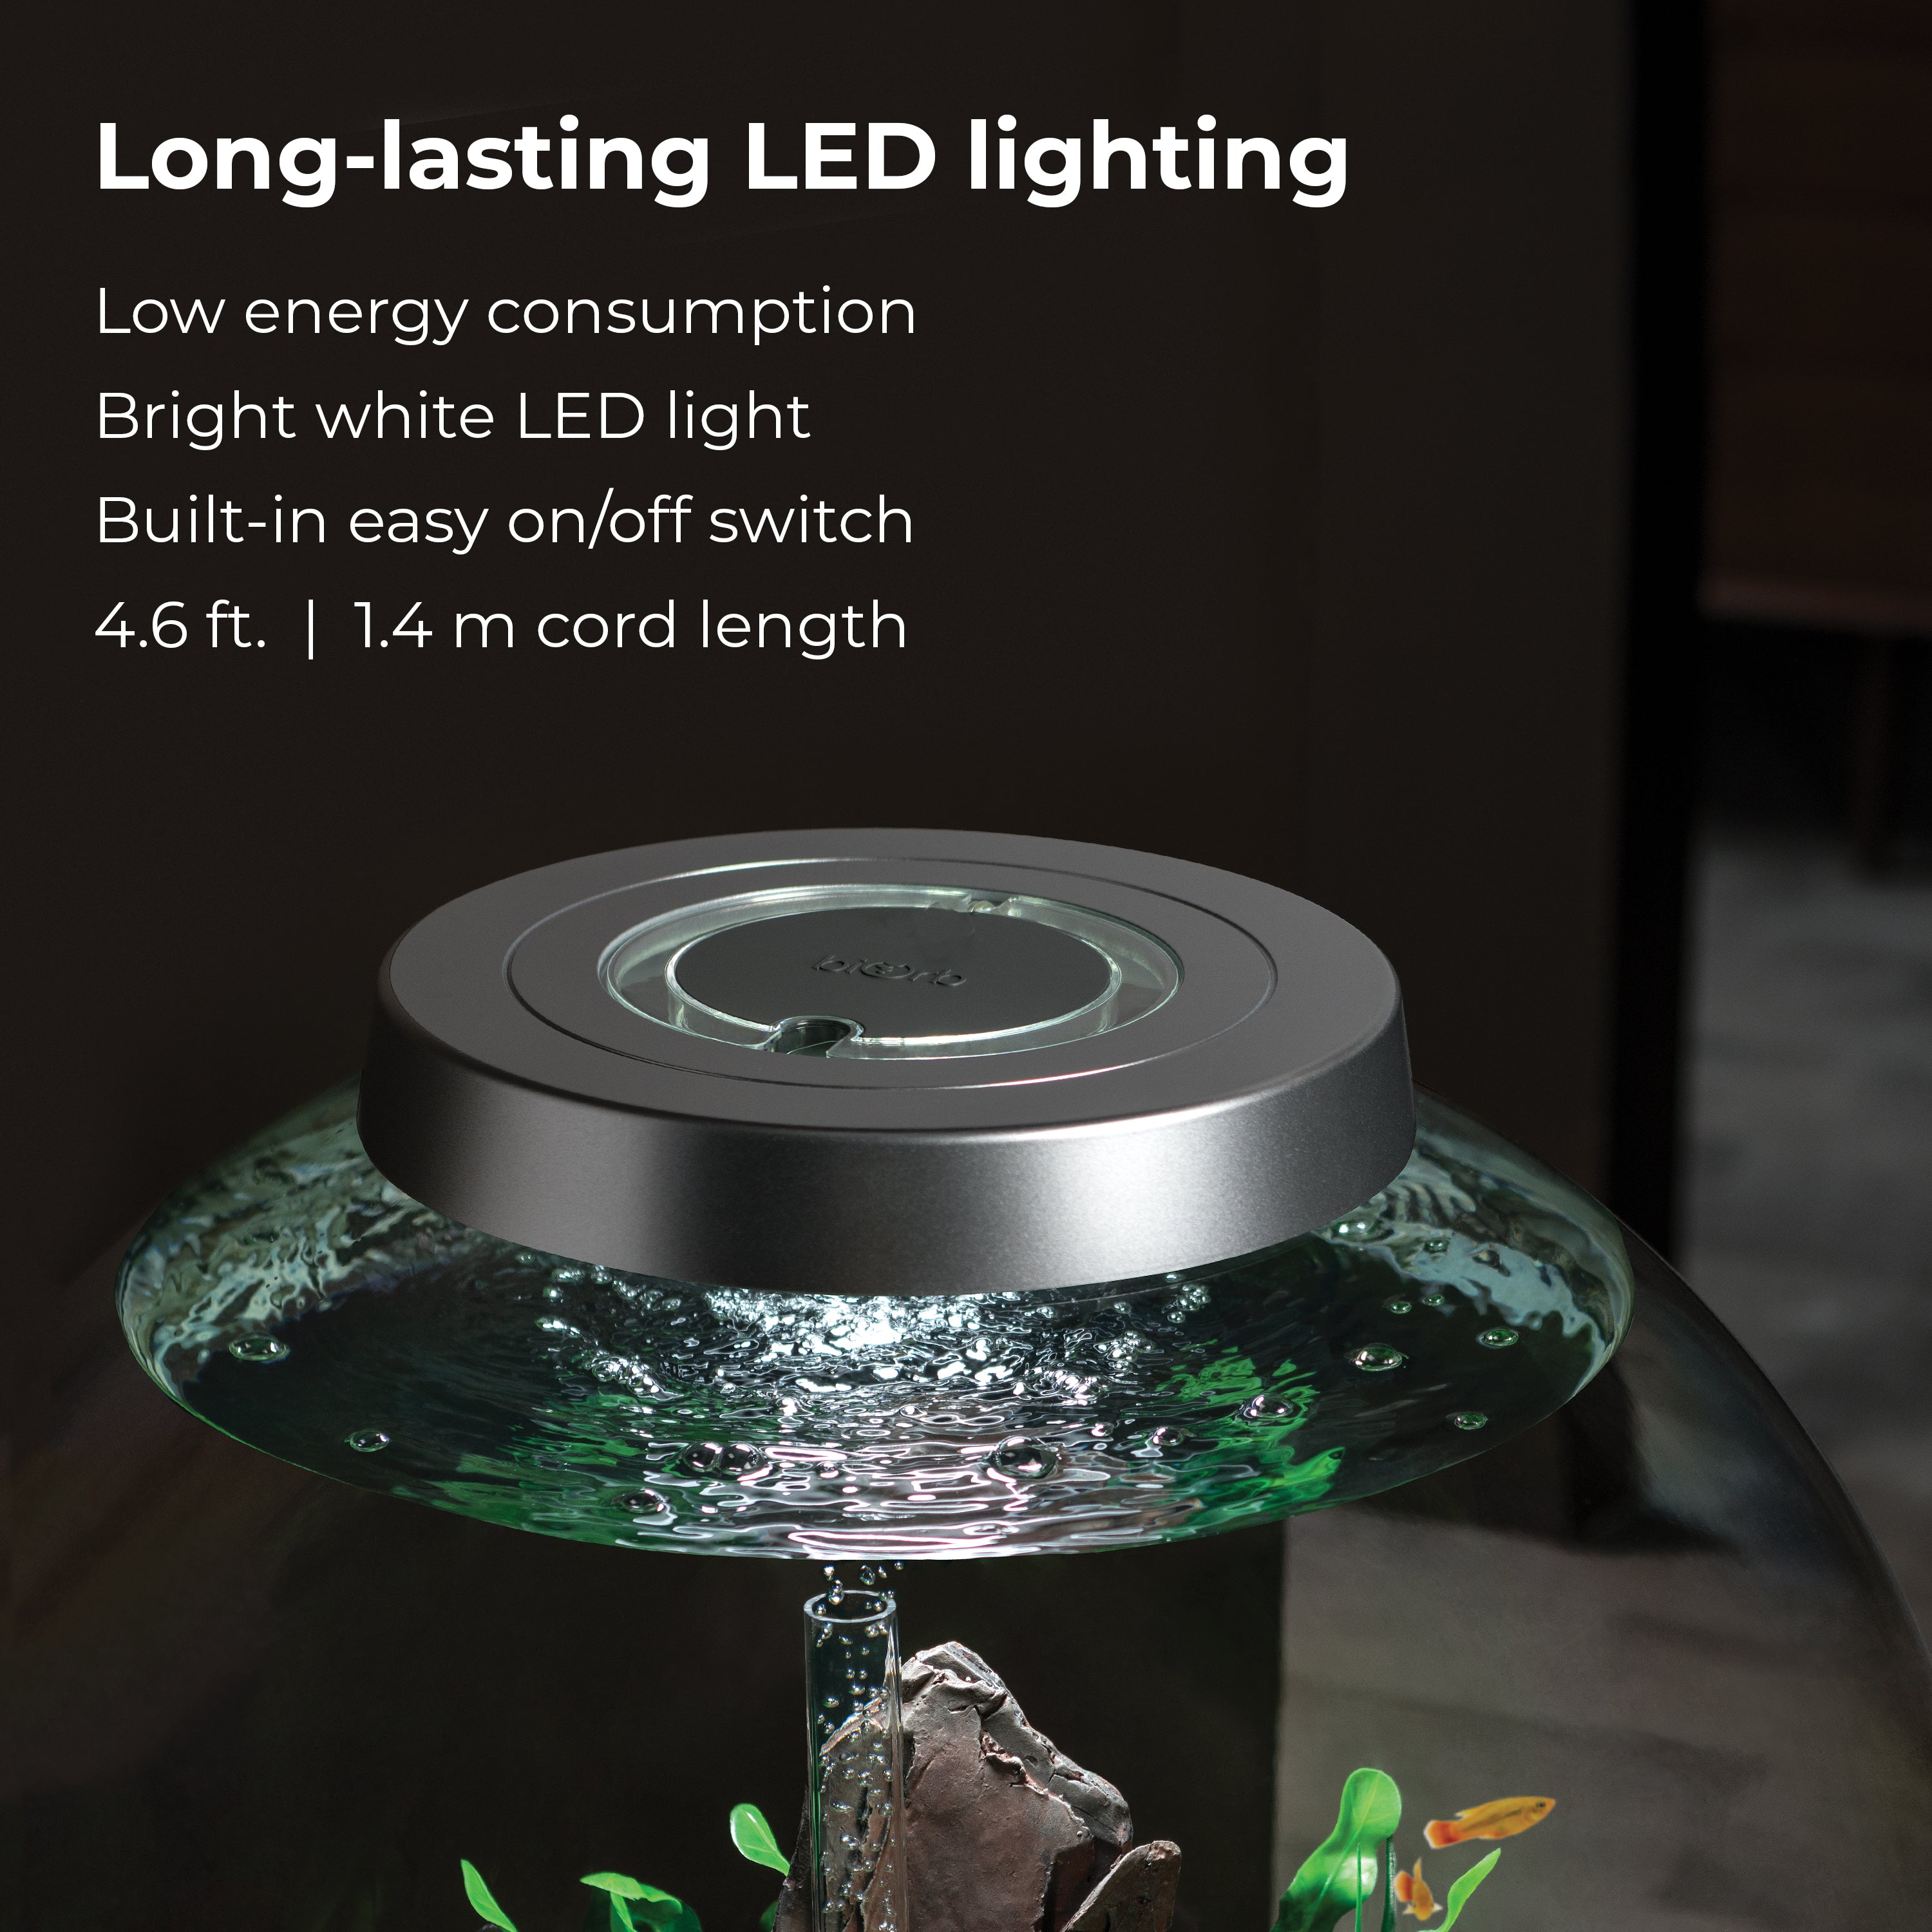 CLASSIC 60 Aquarium with Standard Light - 16 gallon features long-lasting LED lighting